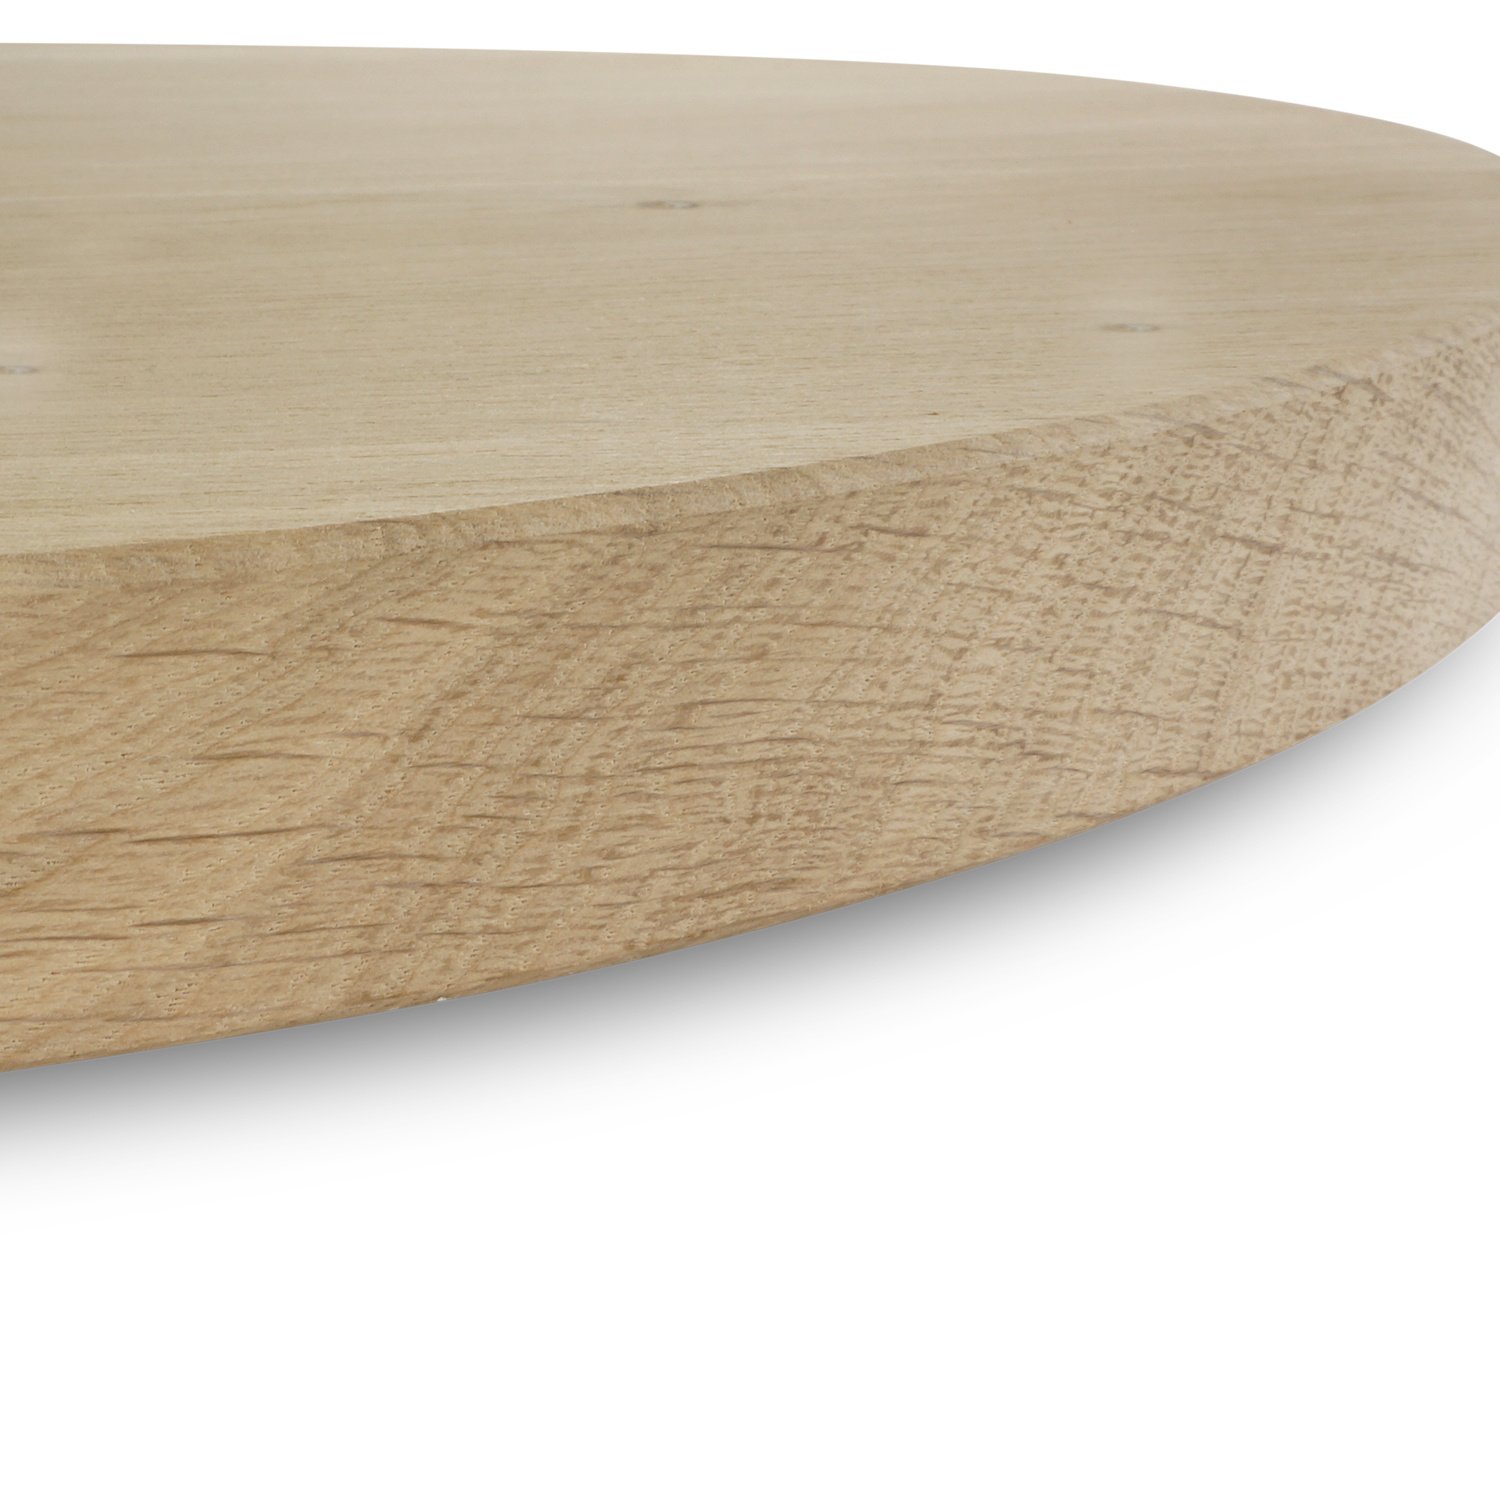  Deens ovaal eiken tafelblad - 2,7 cm dik (1-laag) - Diverse afmetingen - foutvrij Europees eikenhout - met brede lamellen (circa 10-12 cm) - verlijmd kd 8-12%